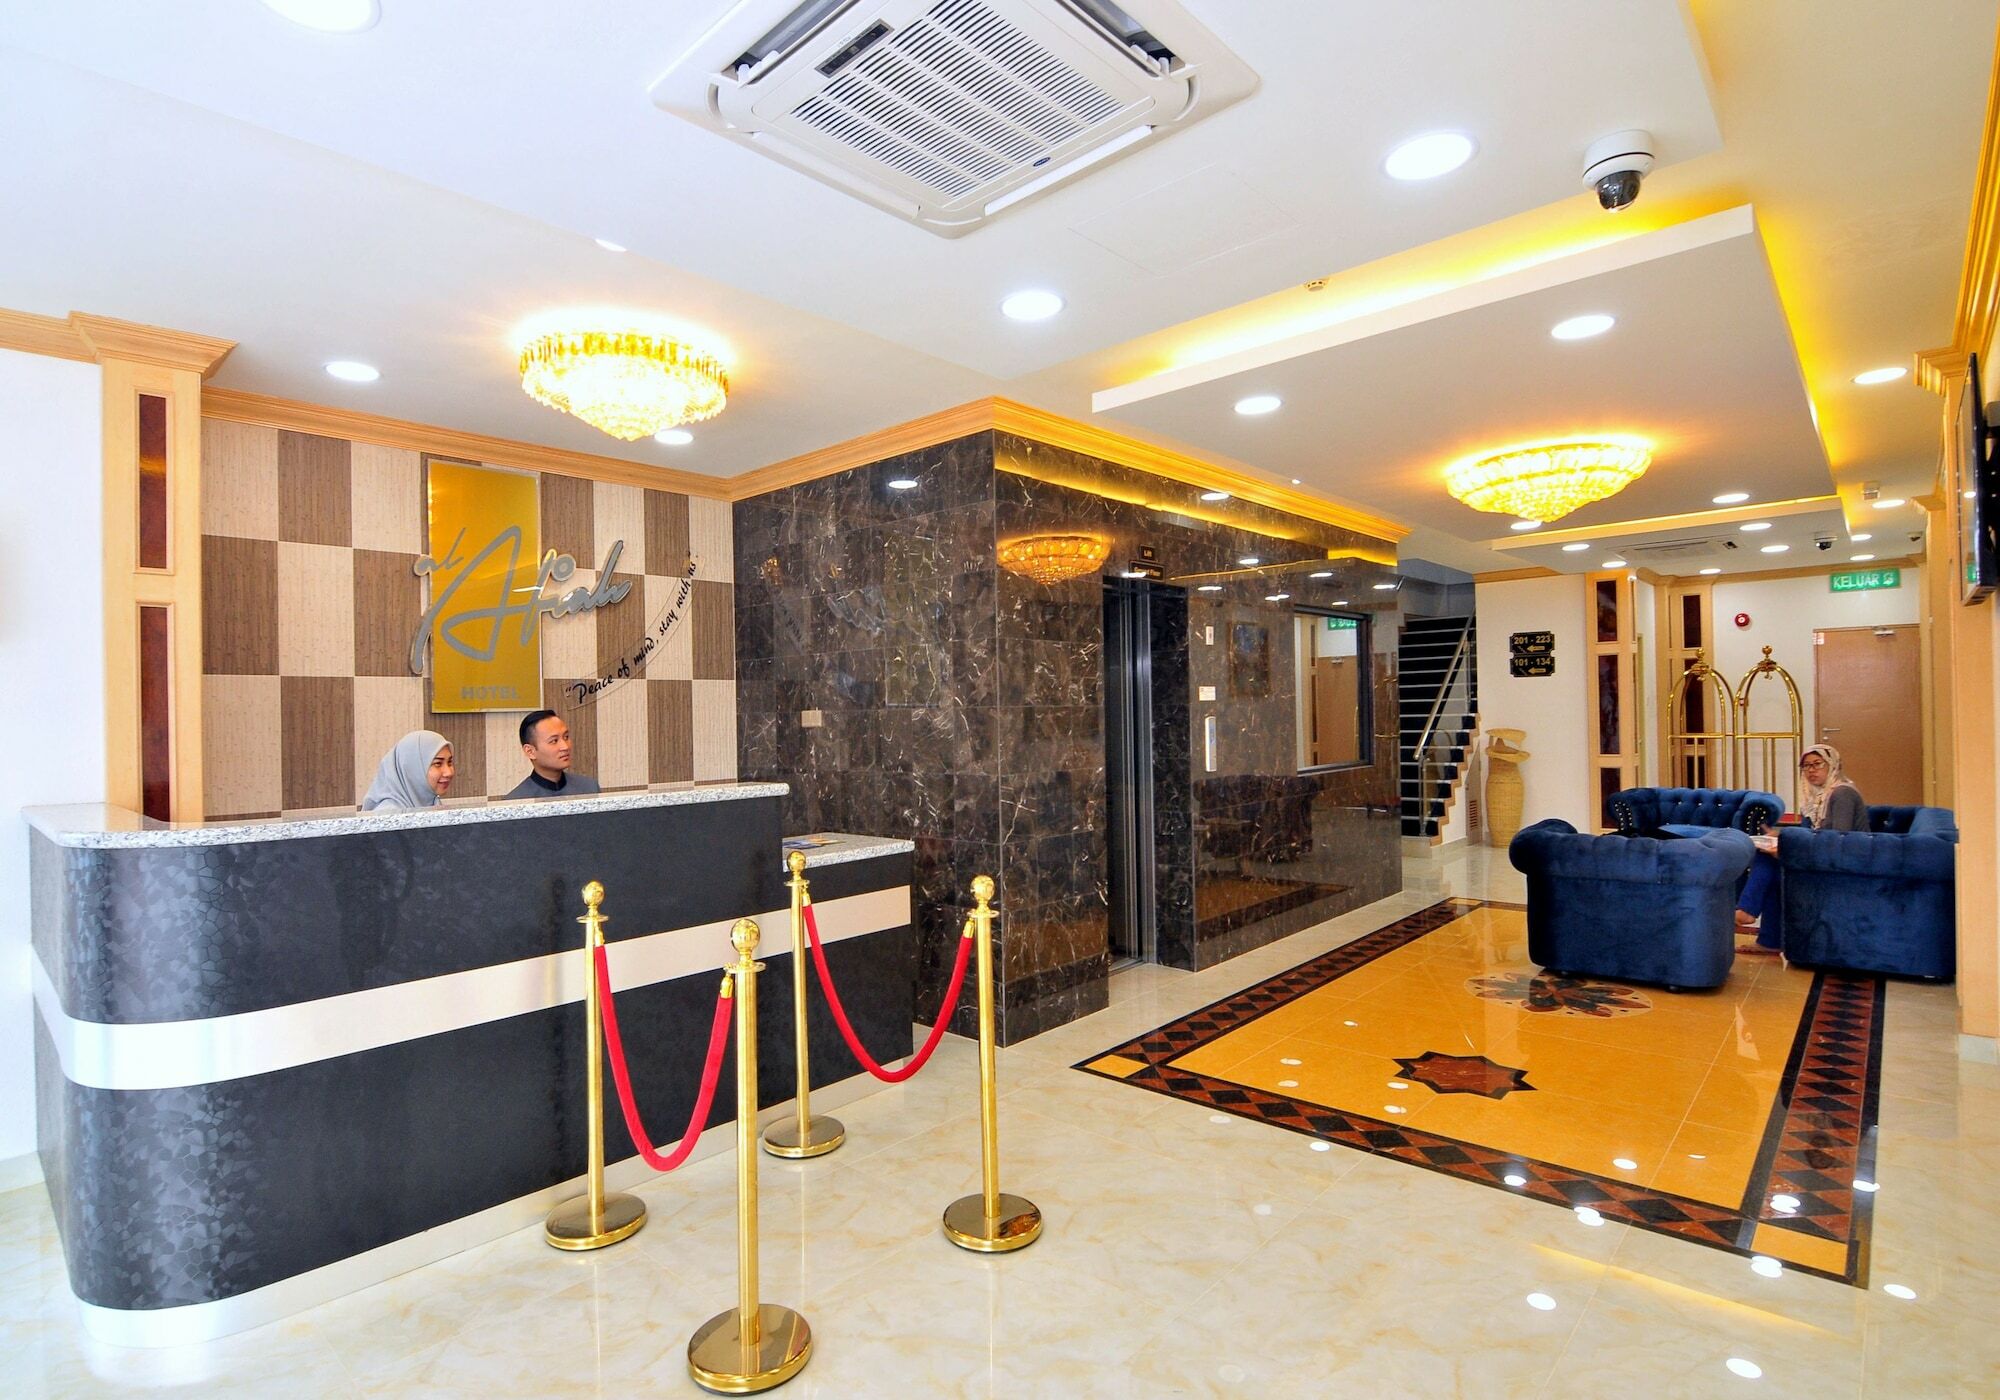 Al Afiah Hotel Bandar Seri Begawan Zewnętrze zdjęcie